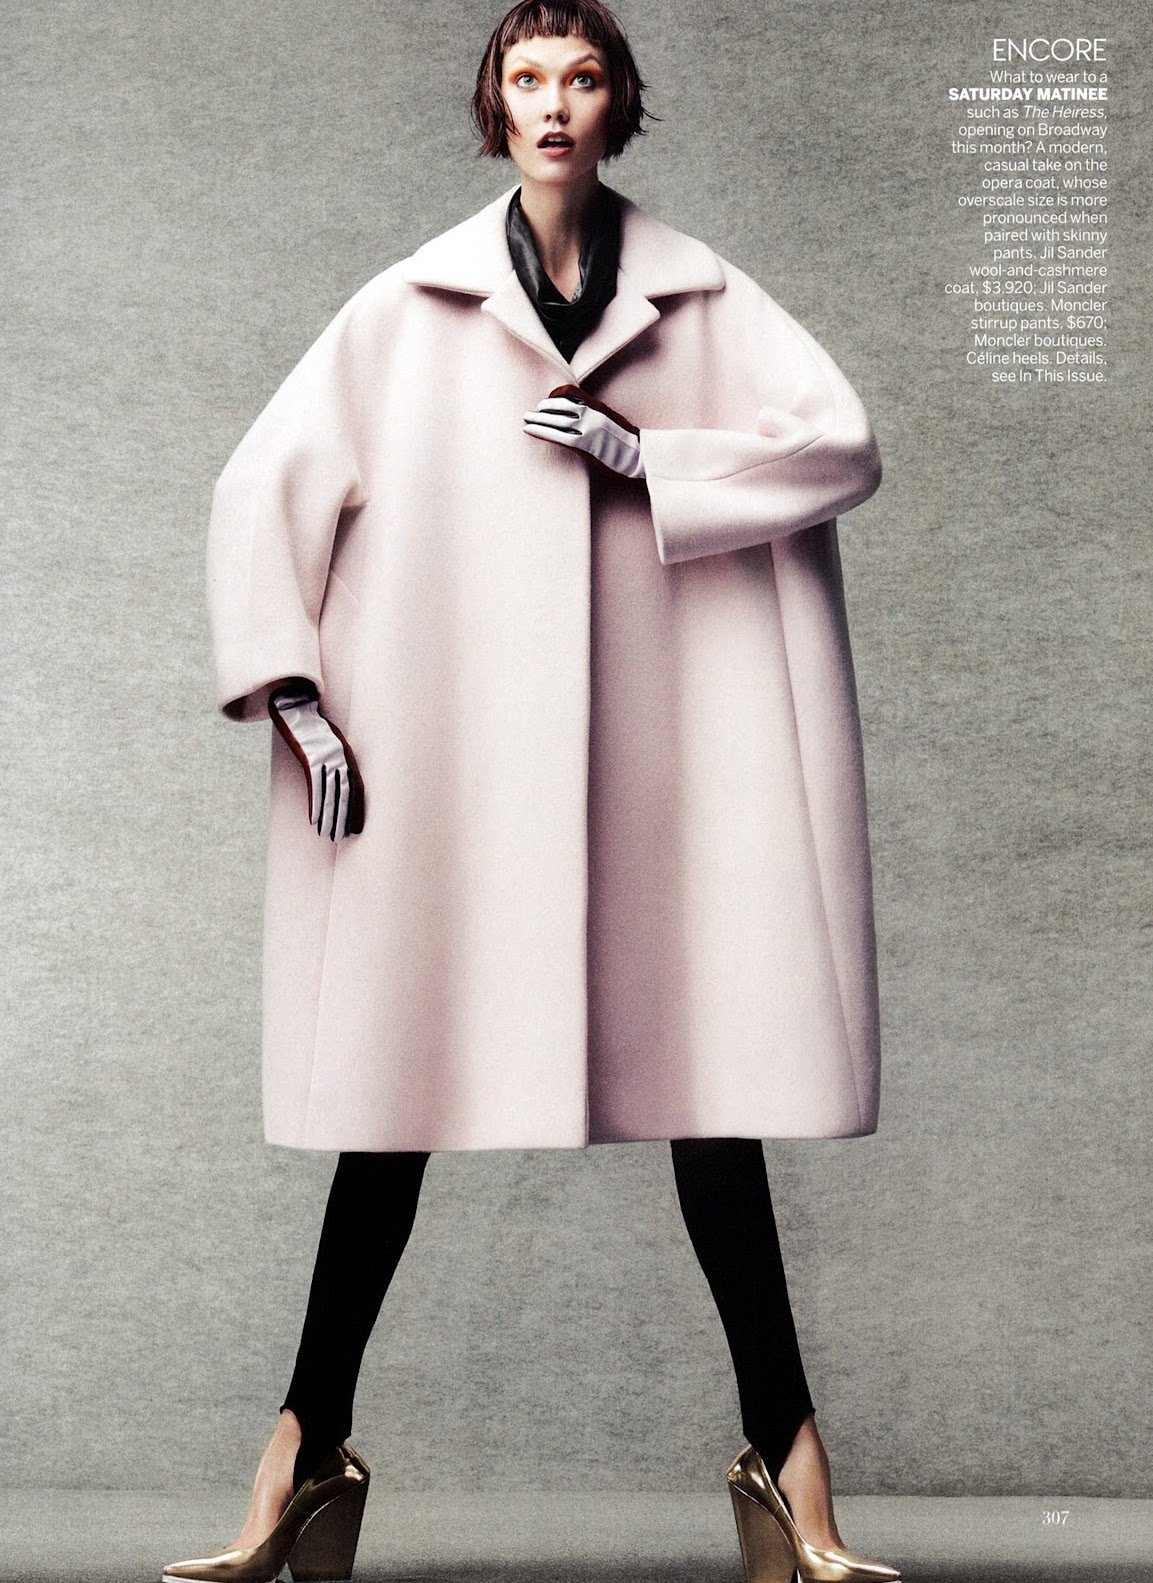 Karlie-Kloss-Daria-Strokous-by-Craig-McDean-Vogue-October-2012-4.jpg